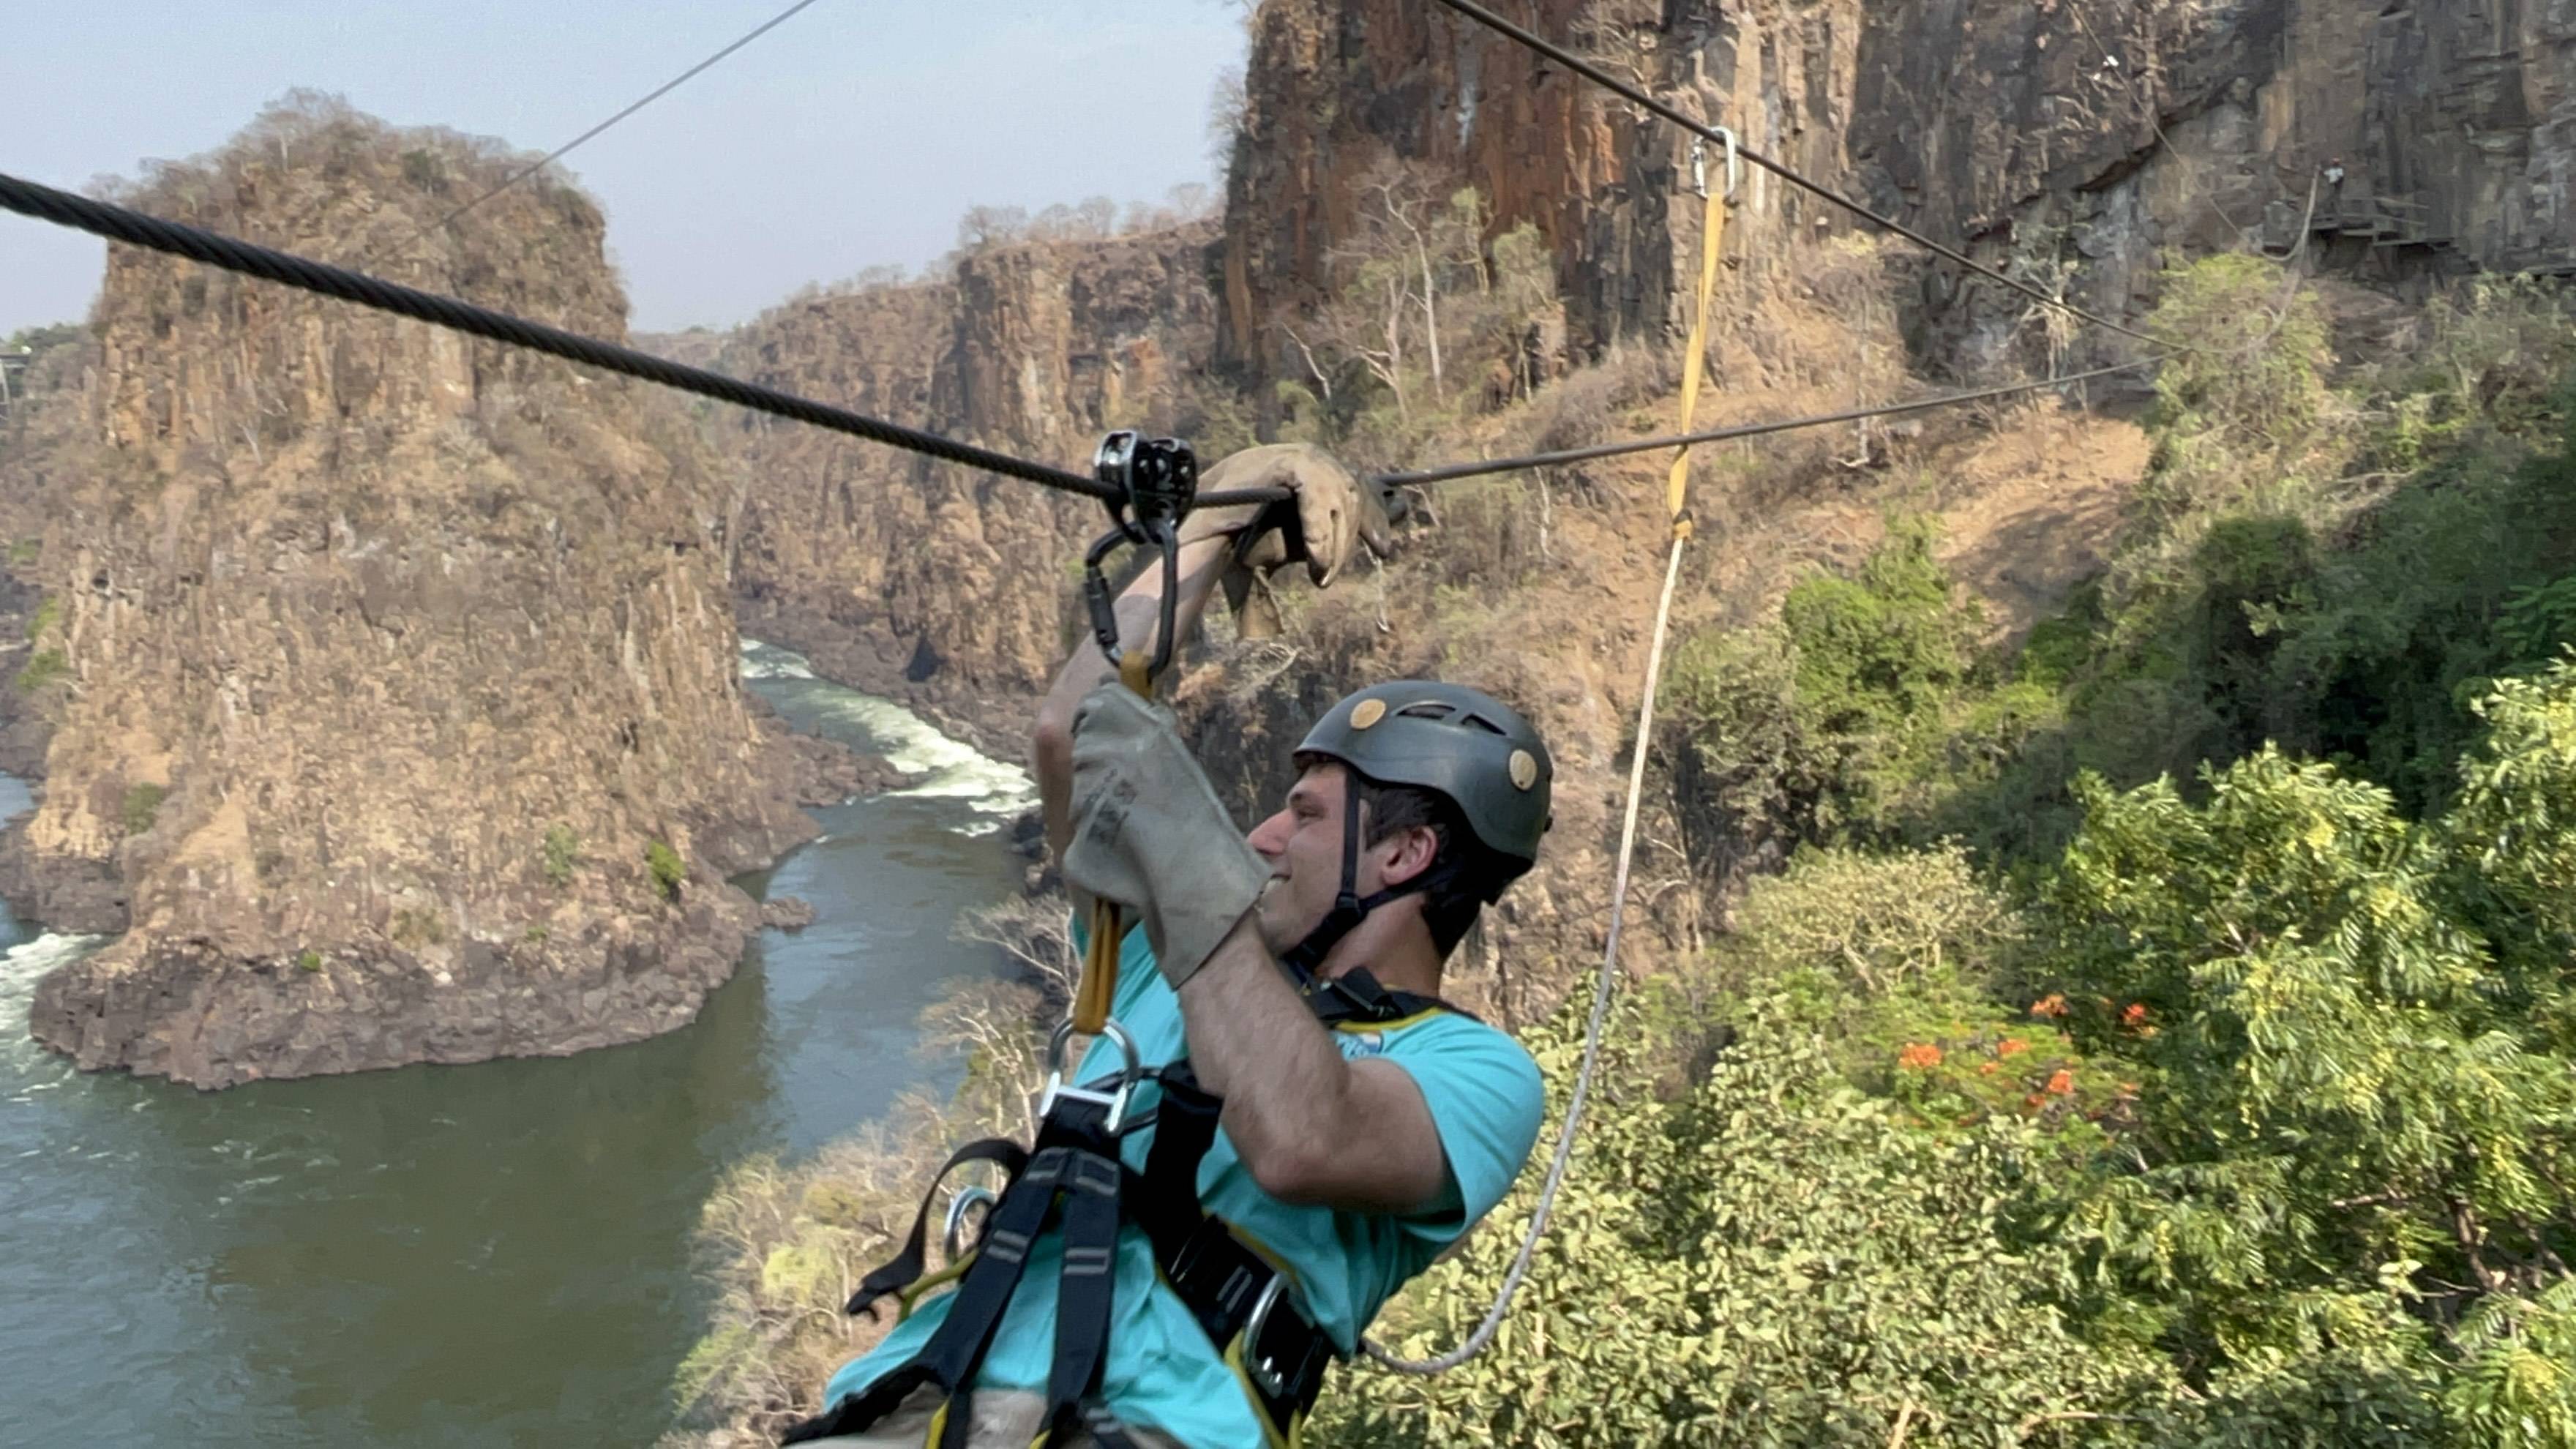 Joseph Berberich '24 on a zipline across a gorge at Victoria Falls, Botswana.